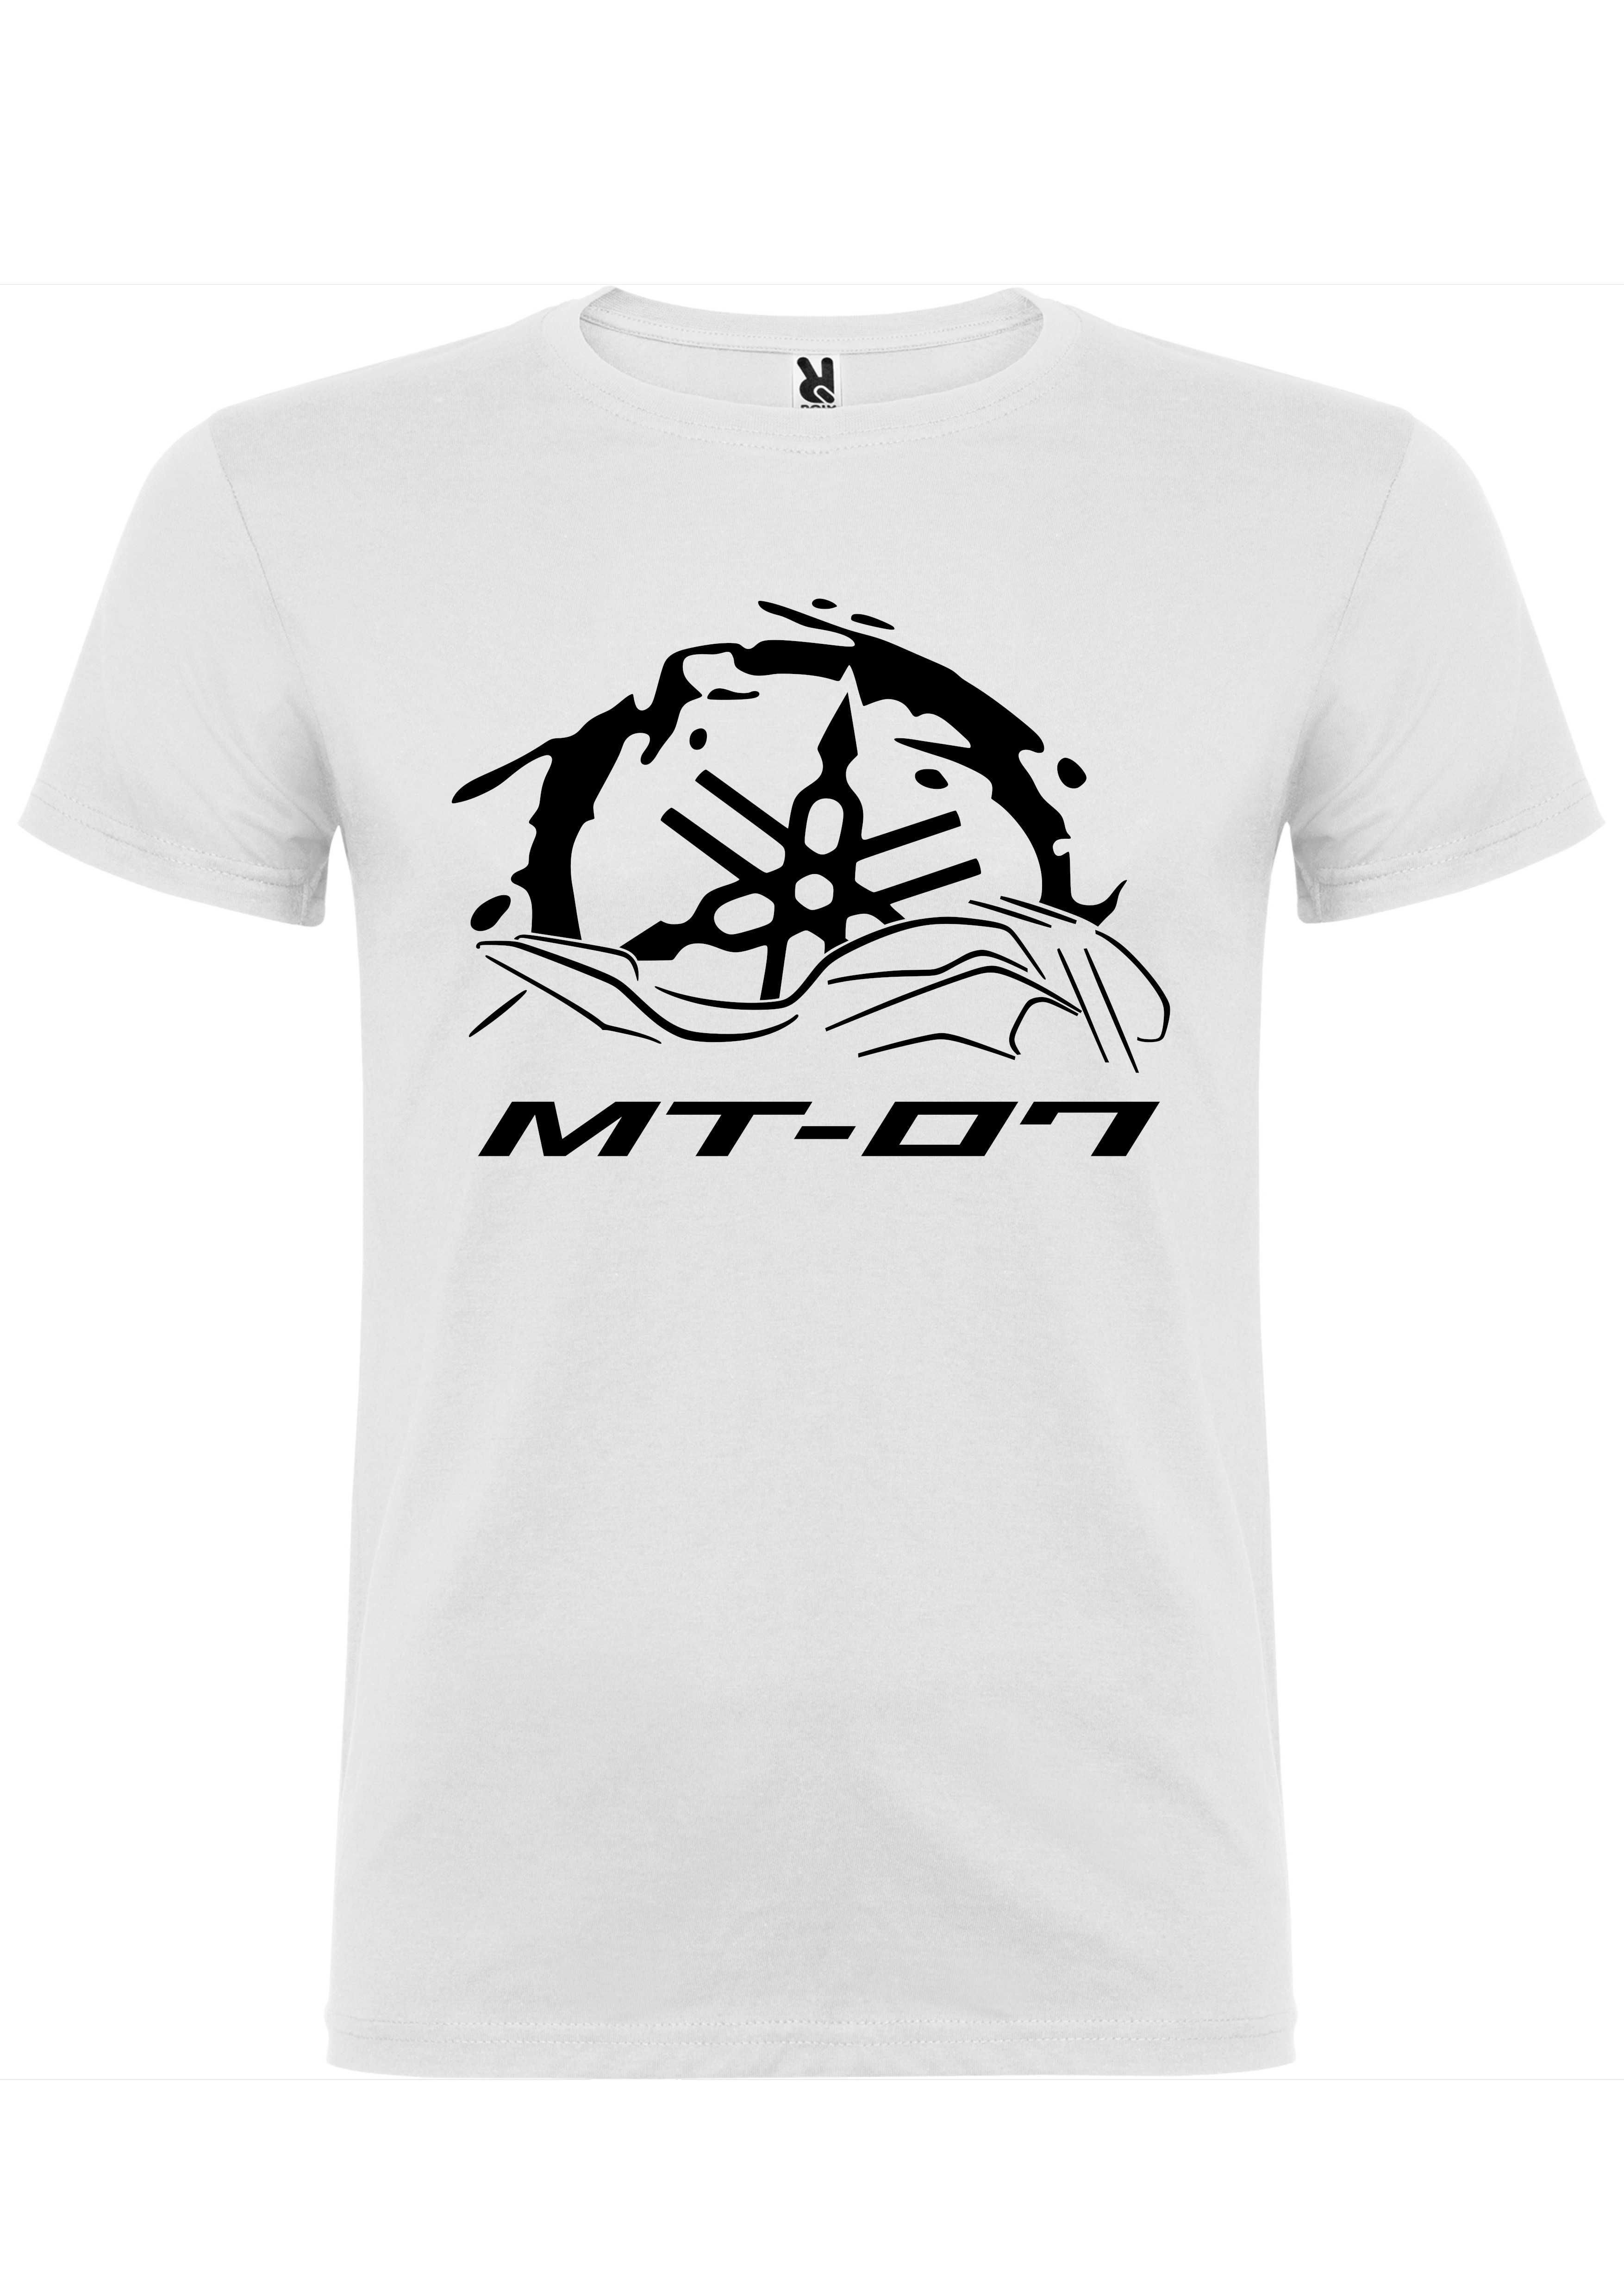 T-shirt Yamaha MT-07 moto perfil + logo